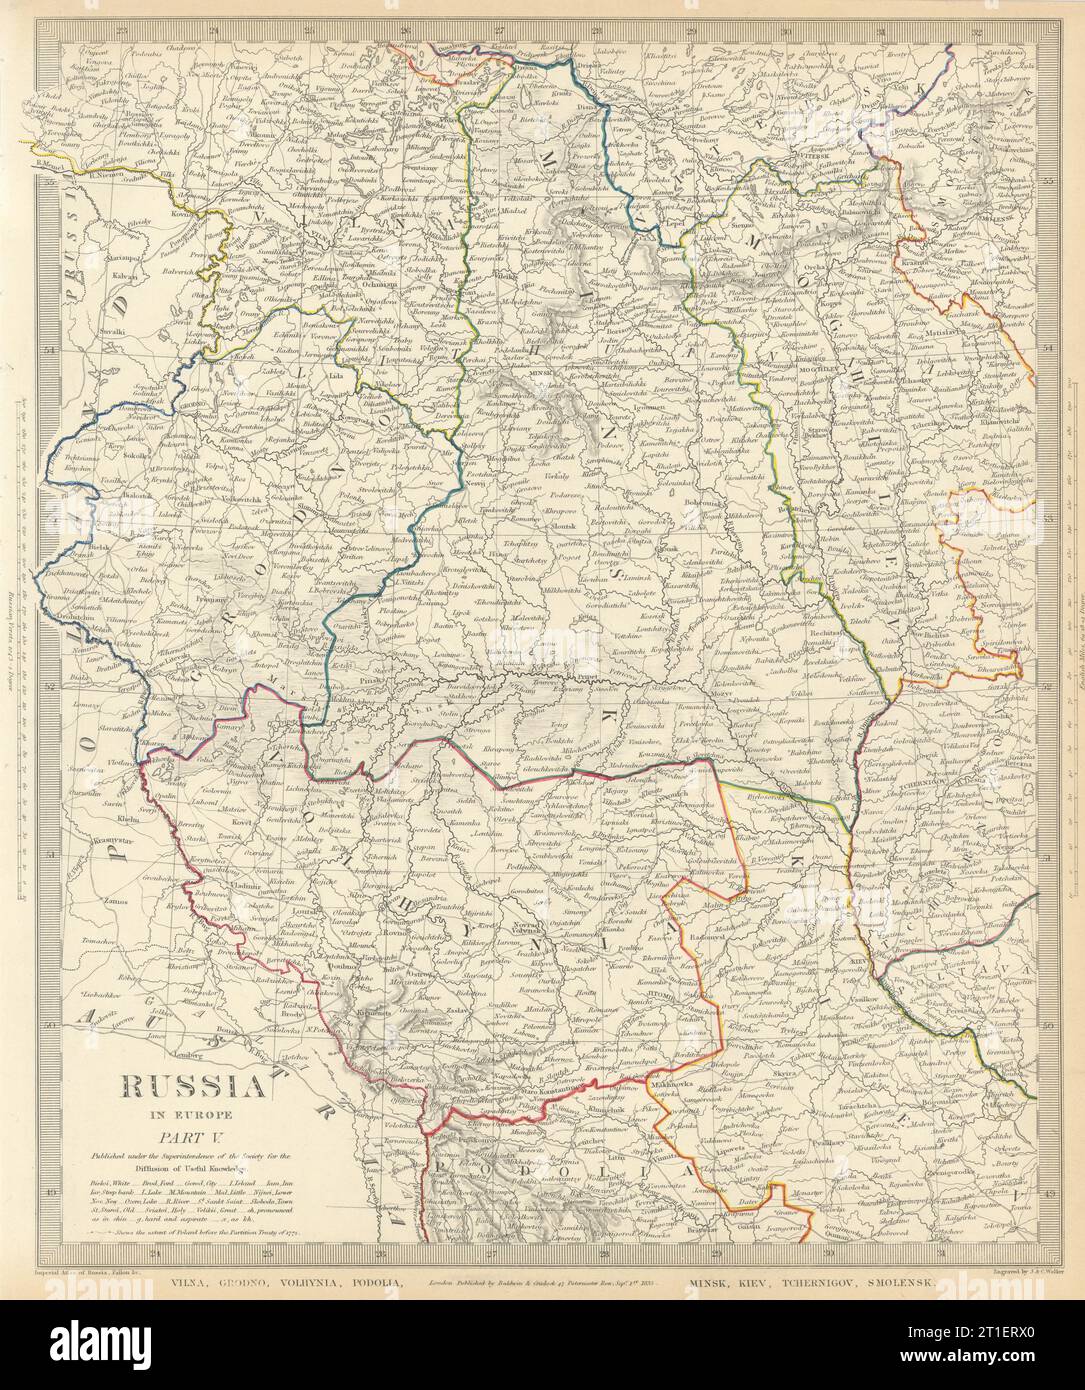 EASTERN EUROPE.Vilna Grodno Volhynia Podoiva Minsk Kiev Smolensk.SDUK 1844 map Stock Photo